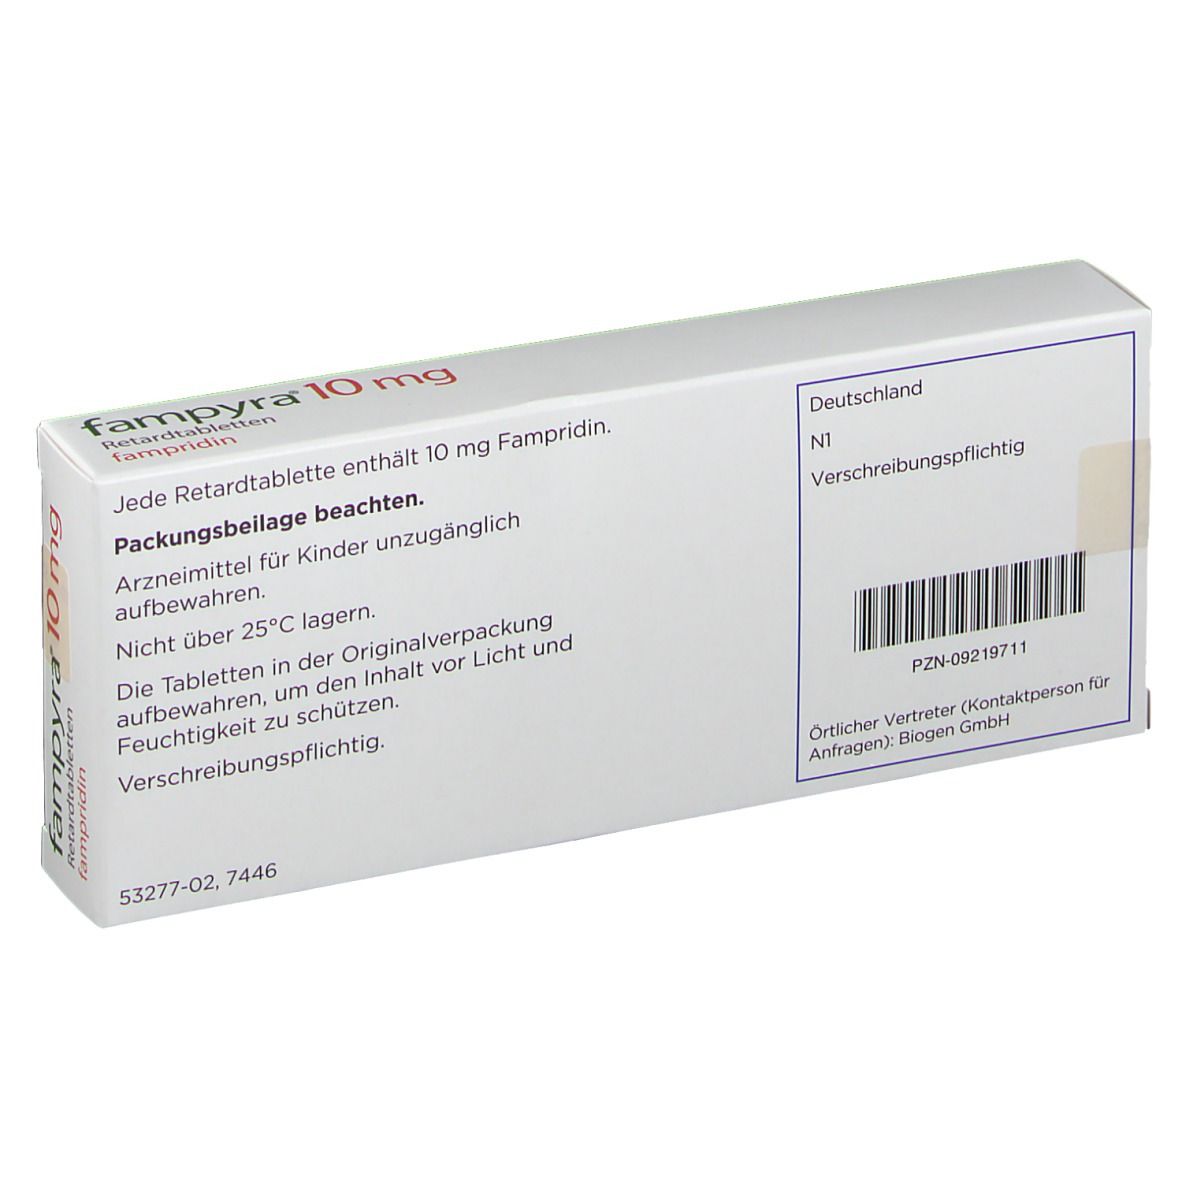 fampyra® 10 mg